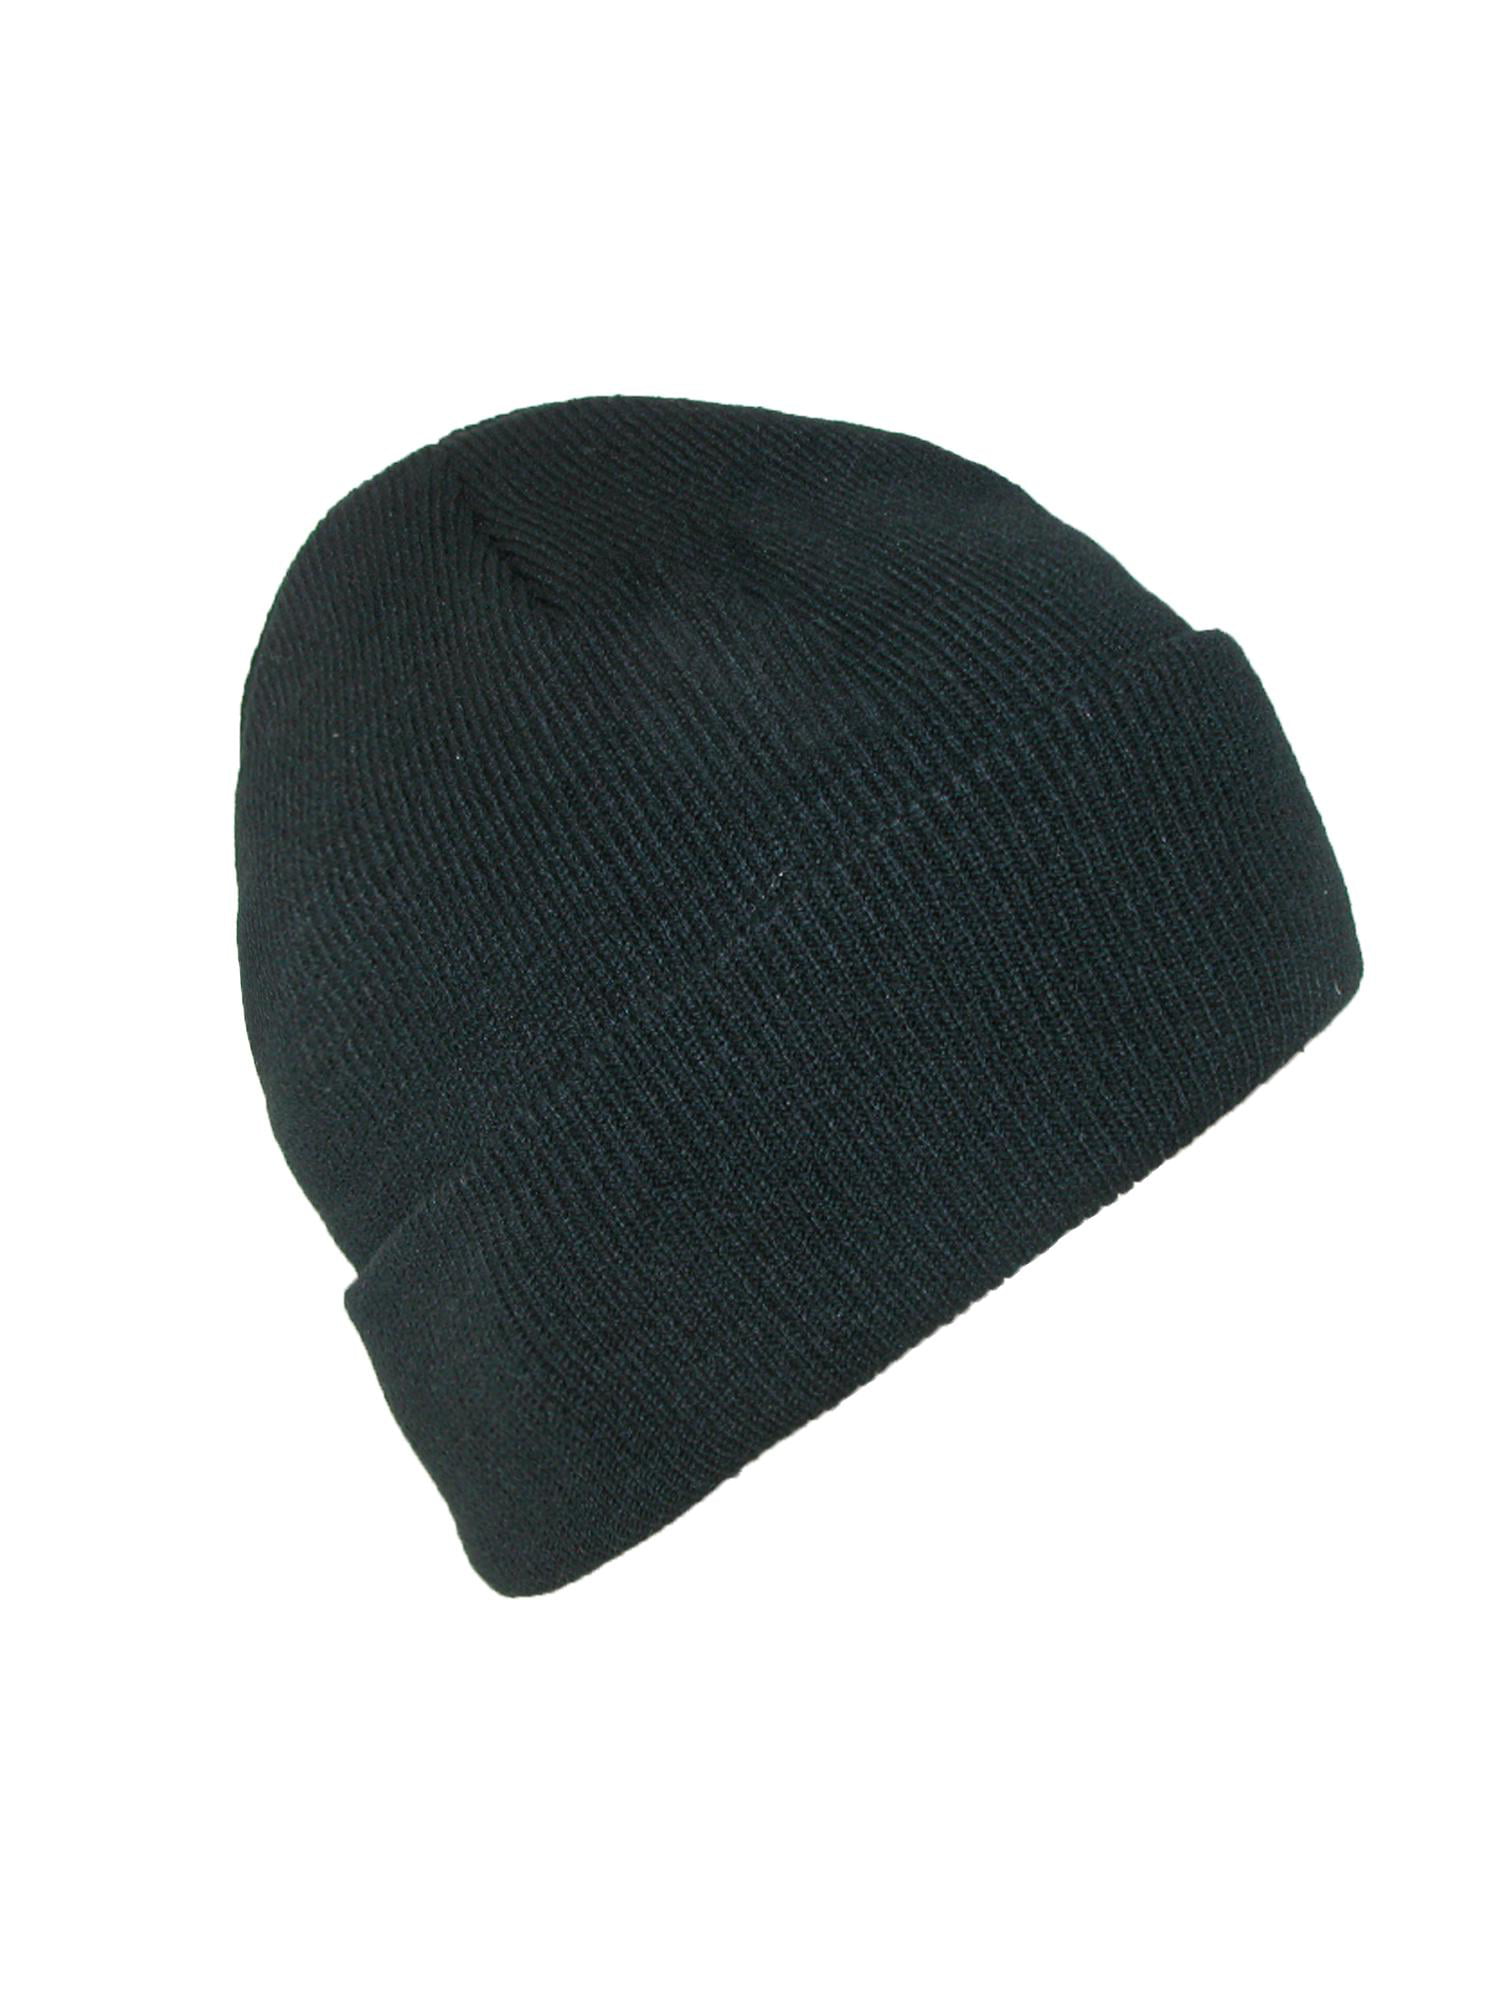 Details about   Men Women Plain Cuff Beanie Knit Ski Cap Warm Solid Color Winter Beany Hats 